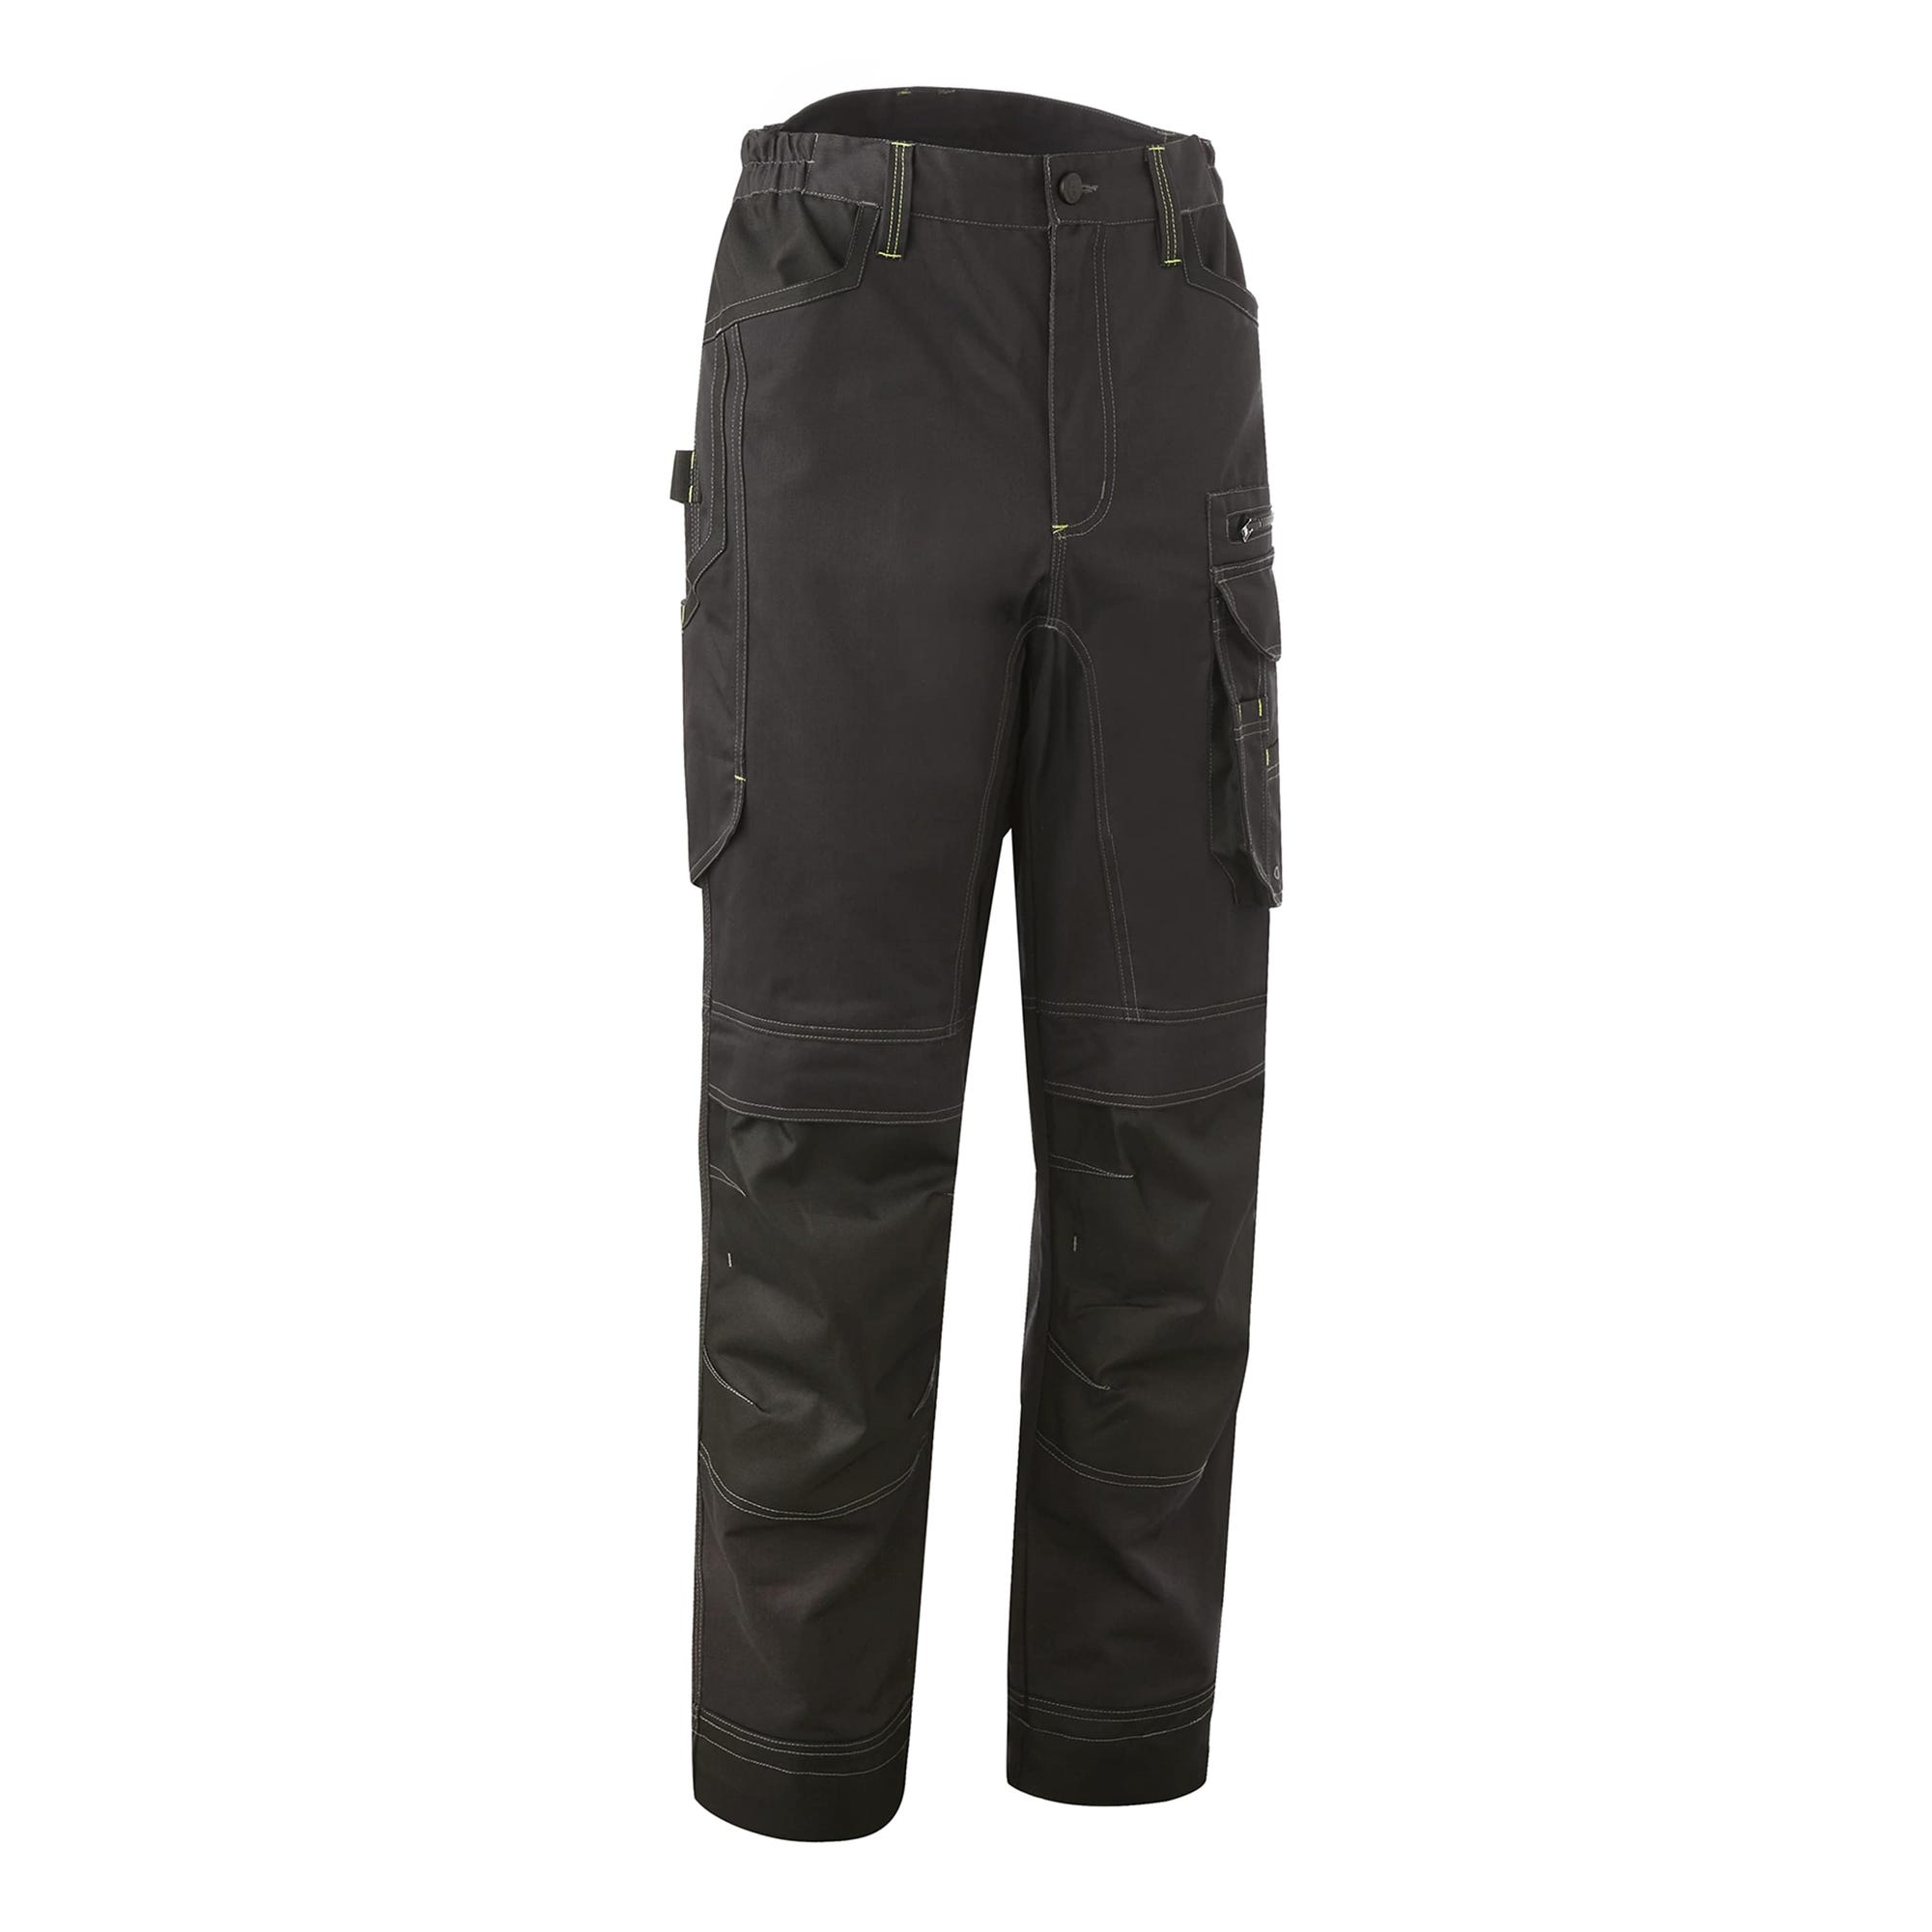 Pantalon BARVA Anthracite-Lime - Coverguard - Taille 4XL 2